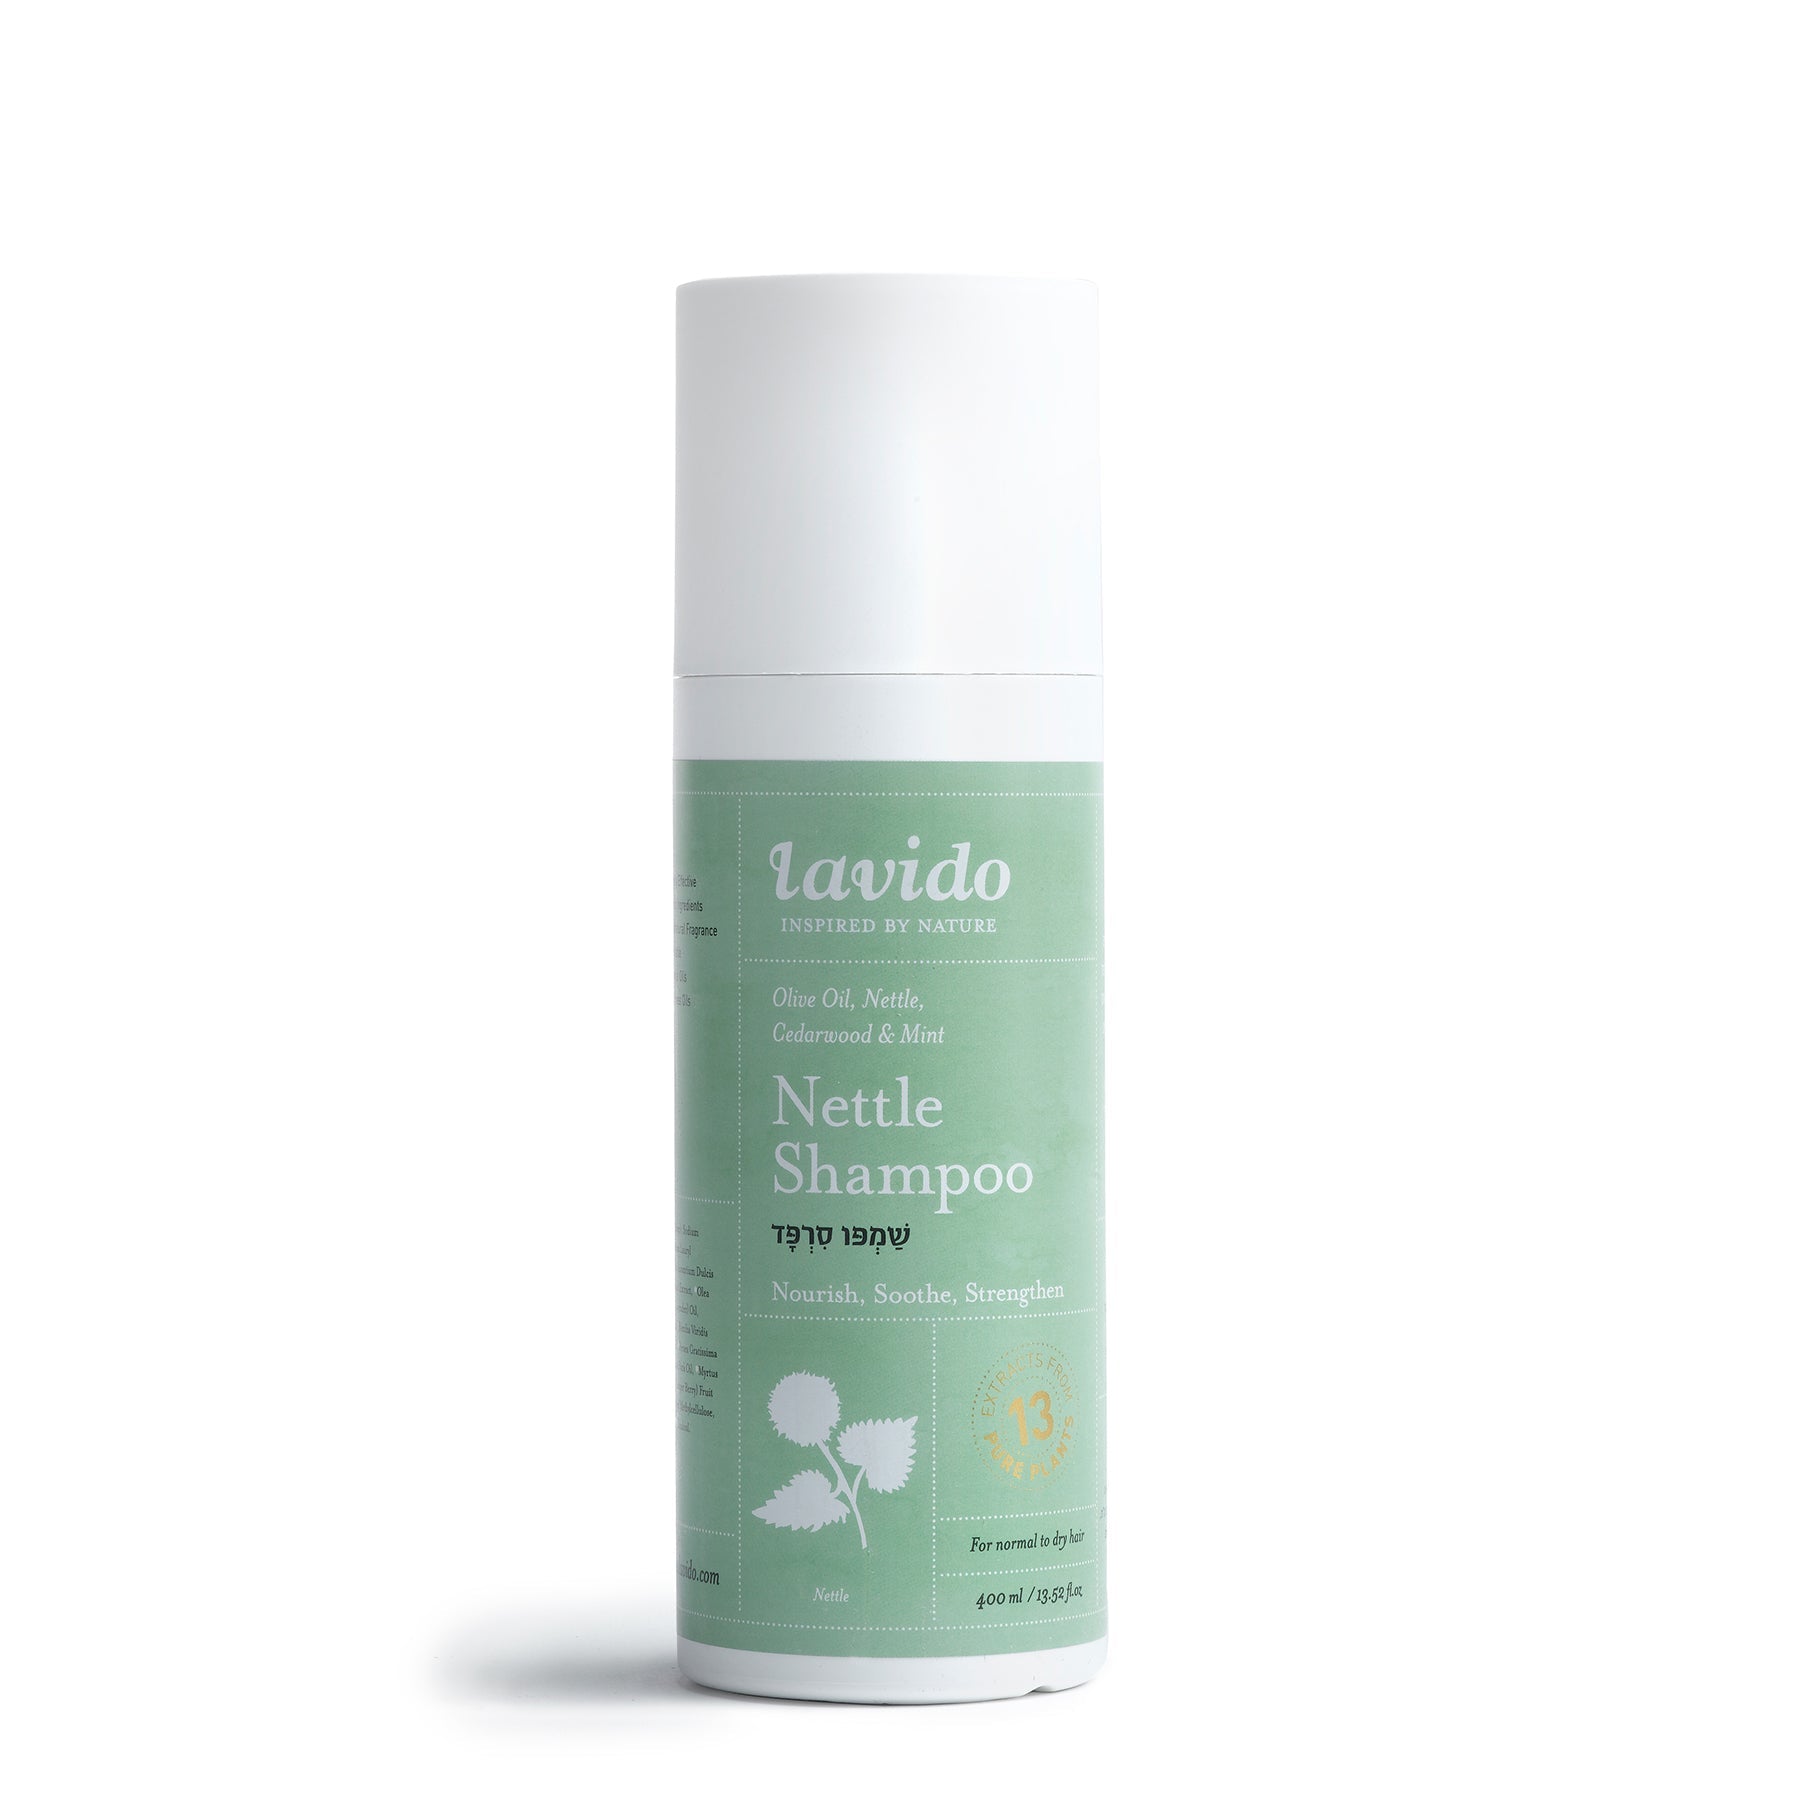 Nettle Shampoo - cedar olive oil and mint - Lavido - Israel Menu